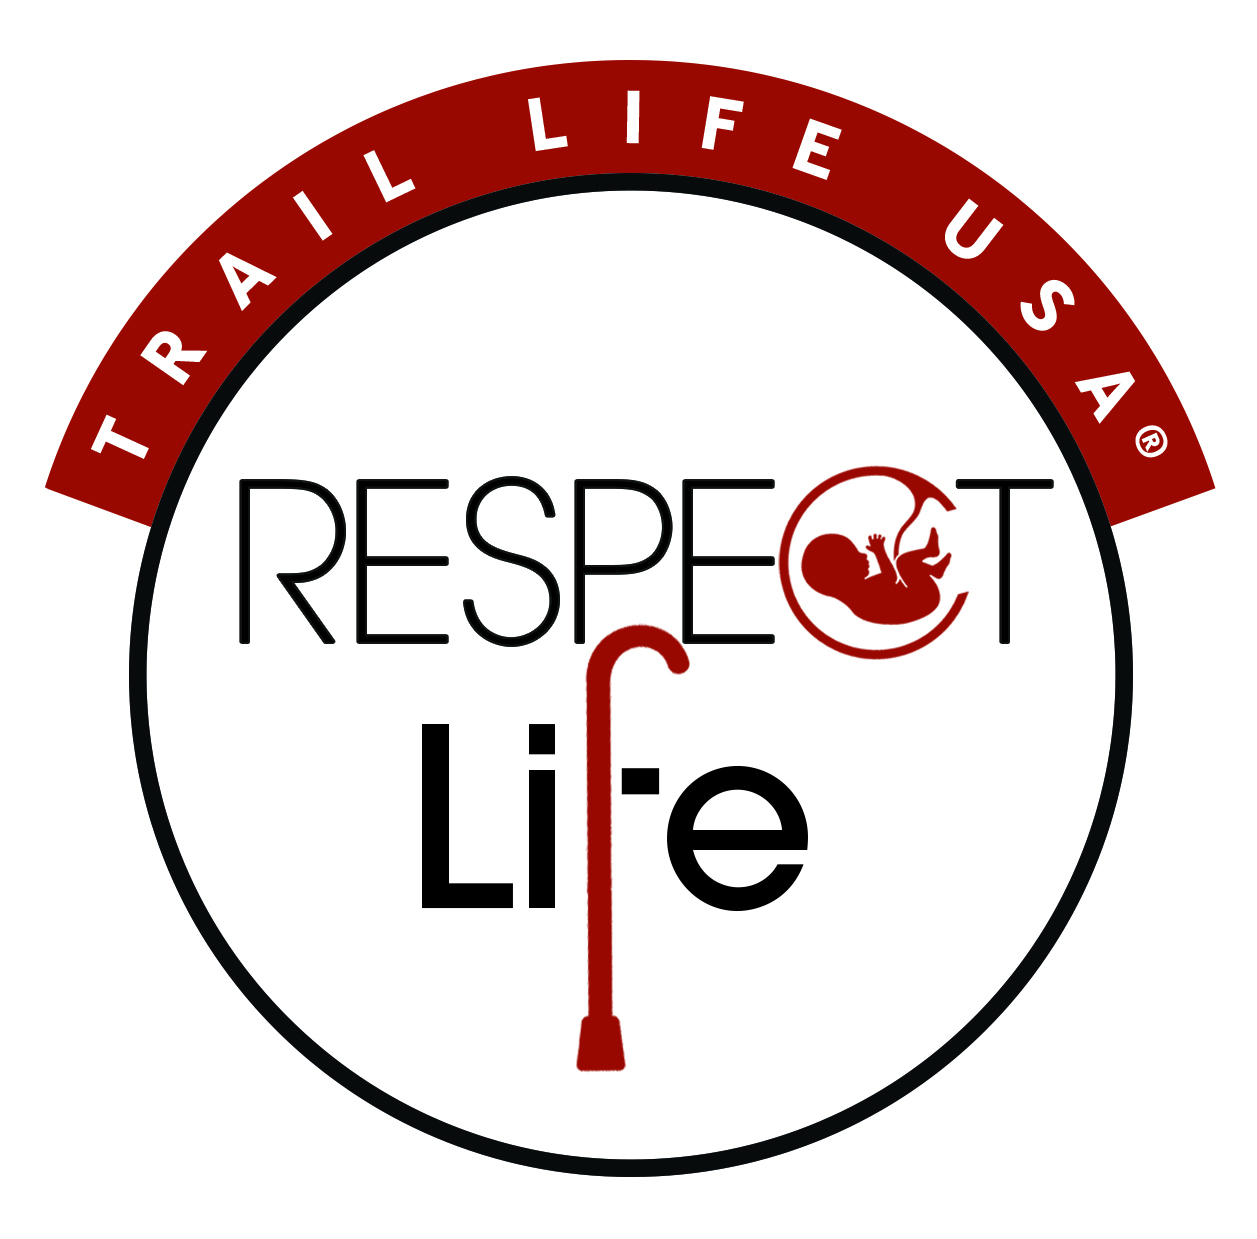 Respect Life 2017